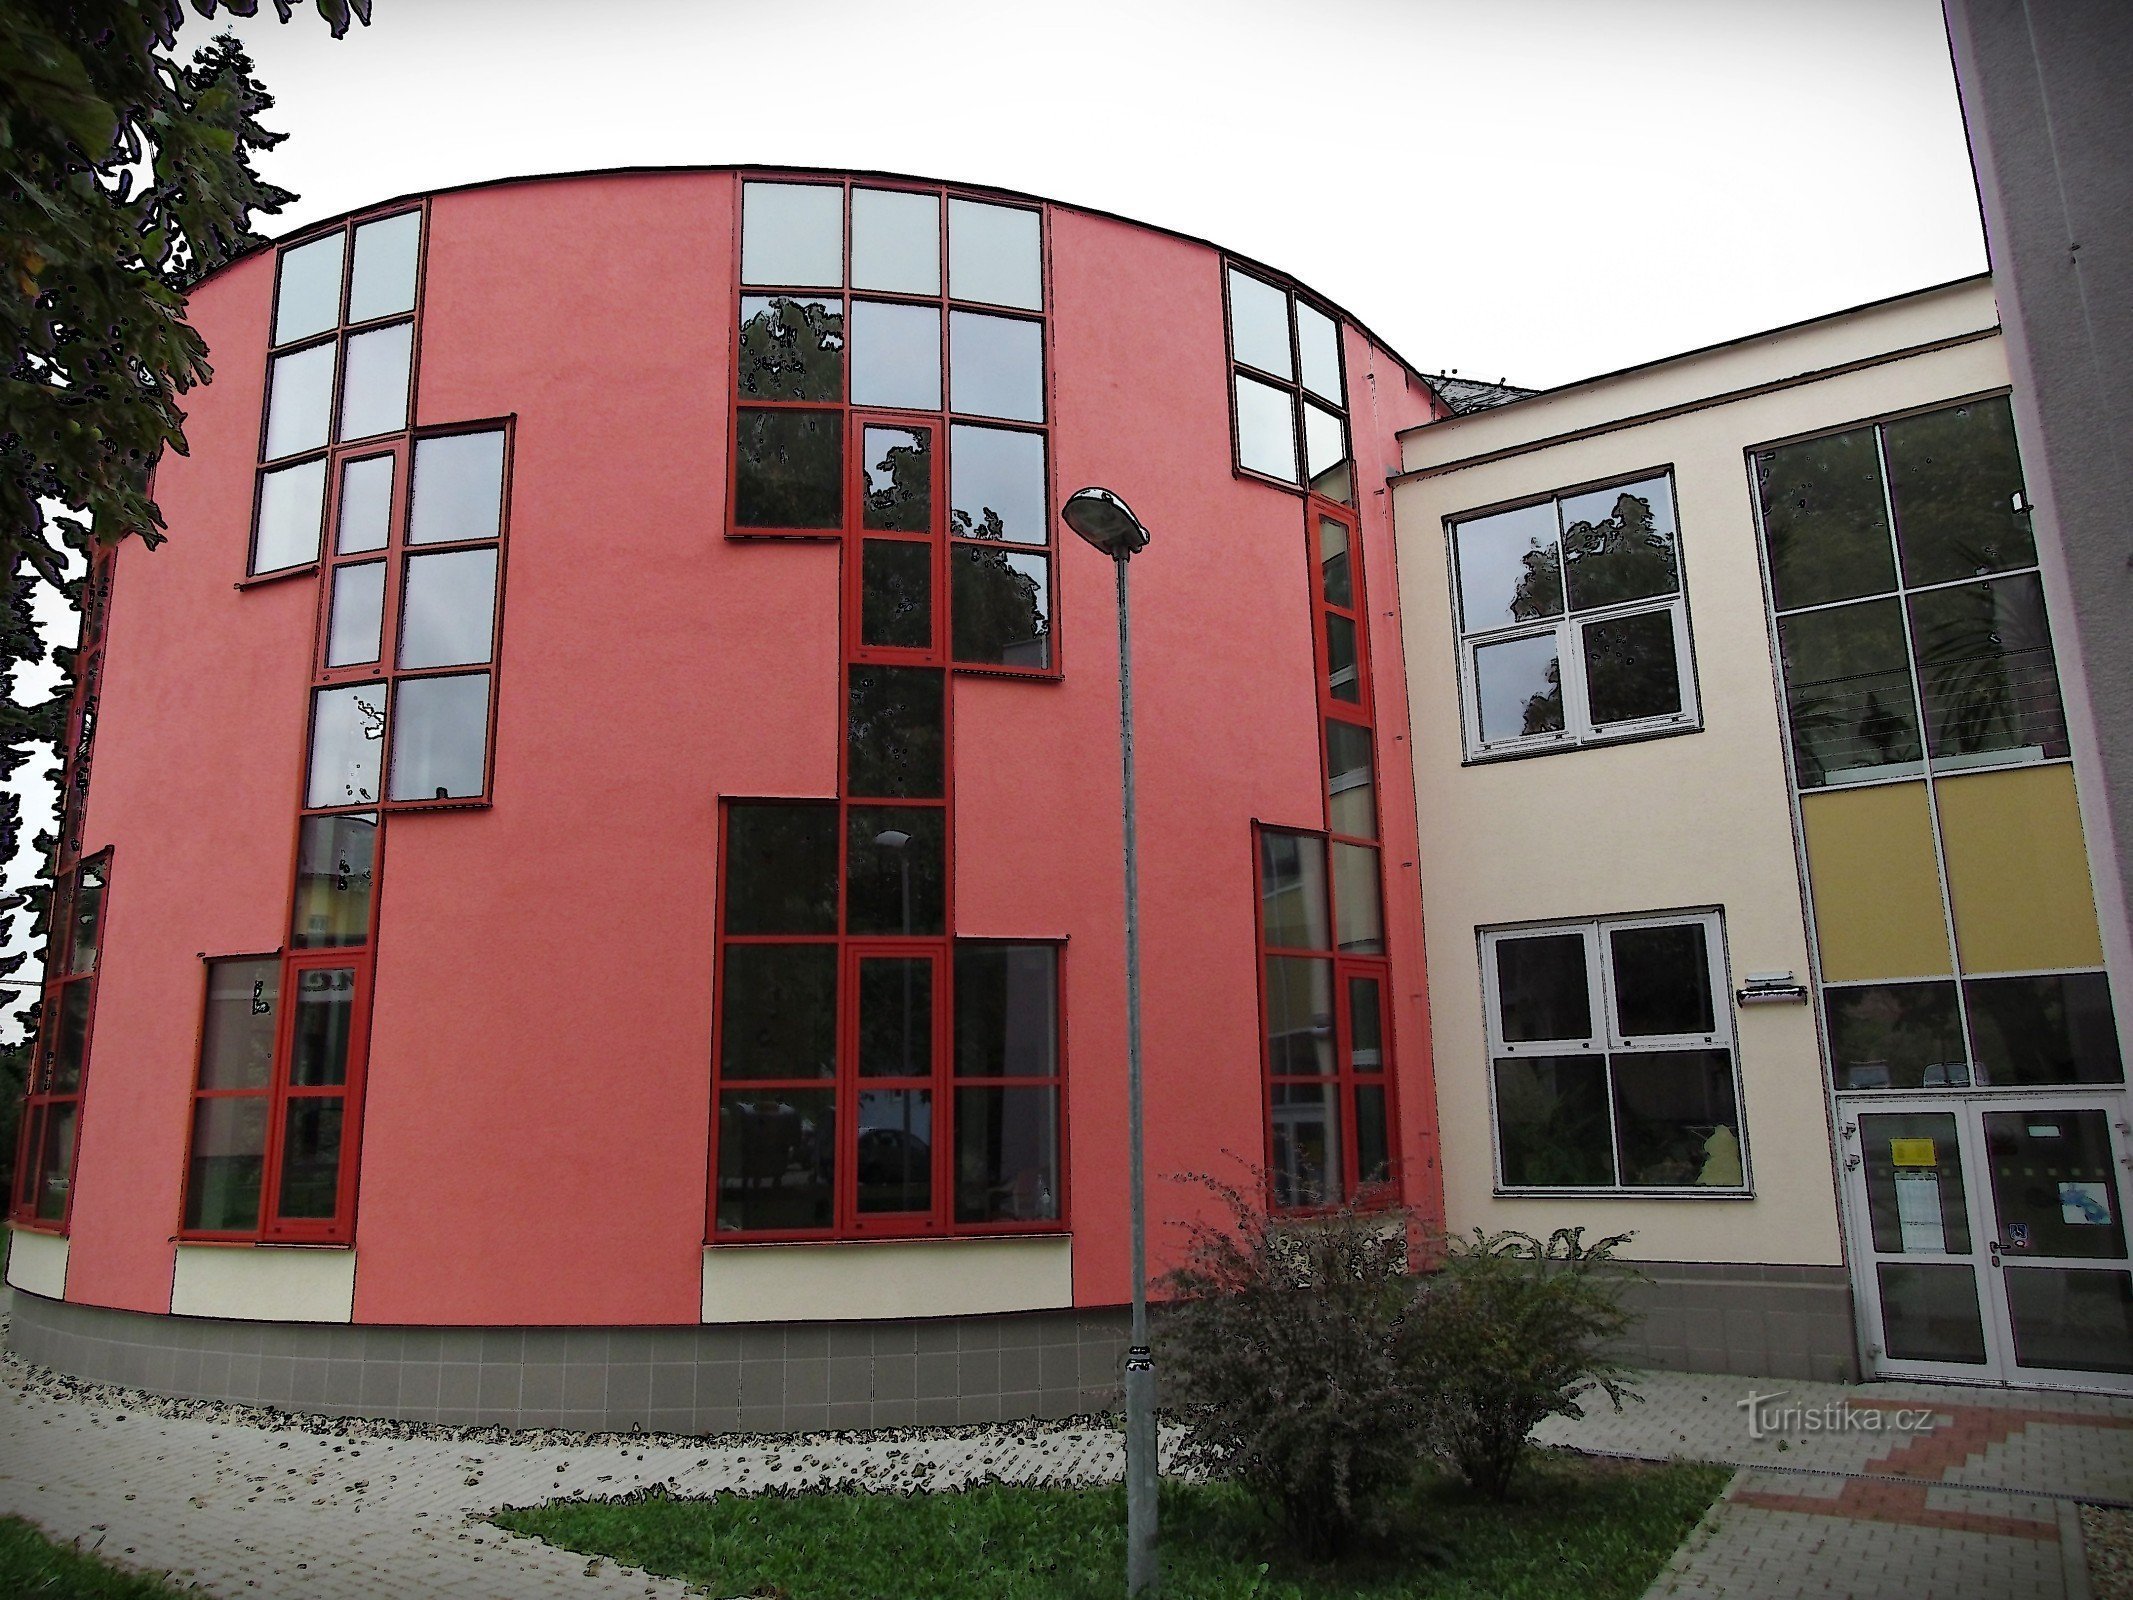 New leisure center in Rýmařov